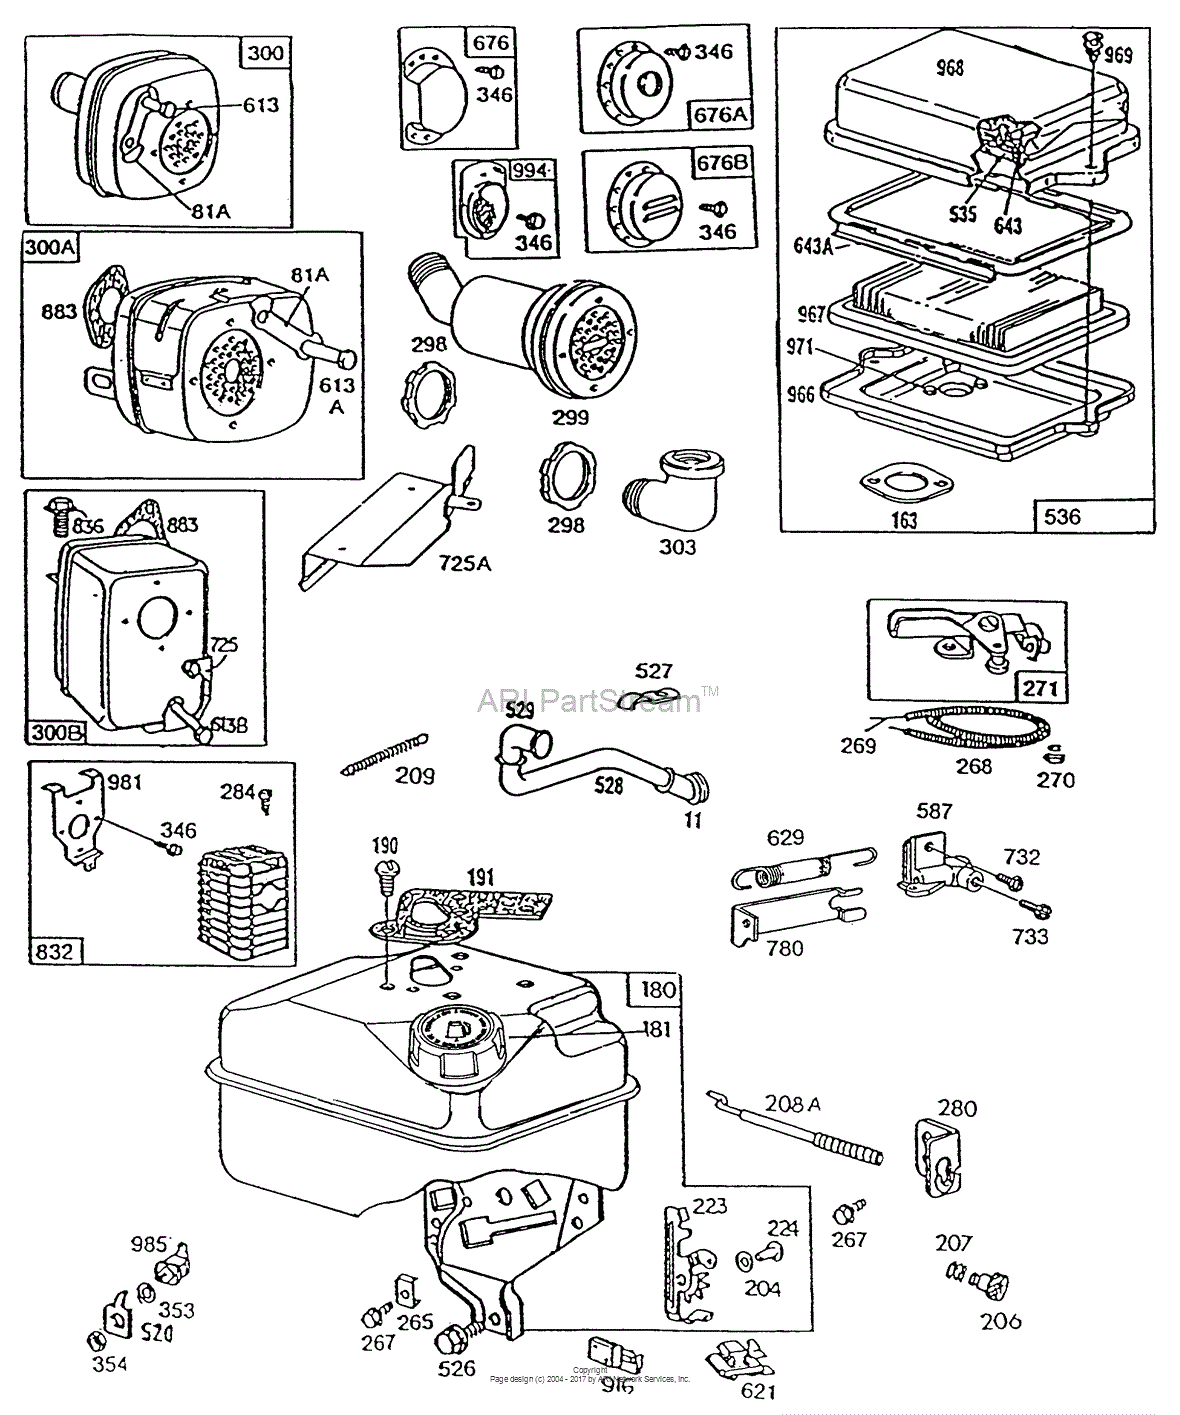 32 Briggs And Stratton Carburetor Linkage Diagram - Wiring ...